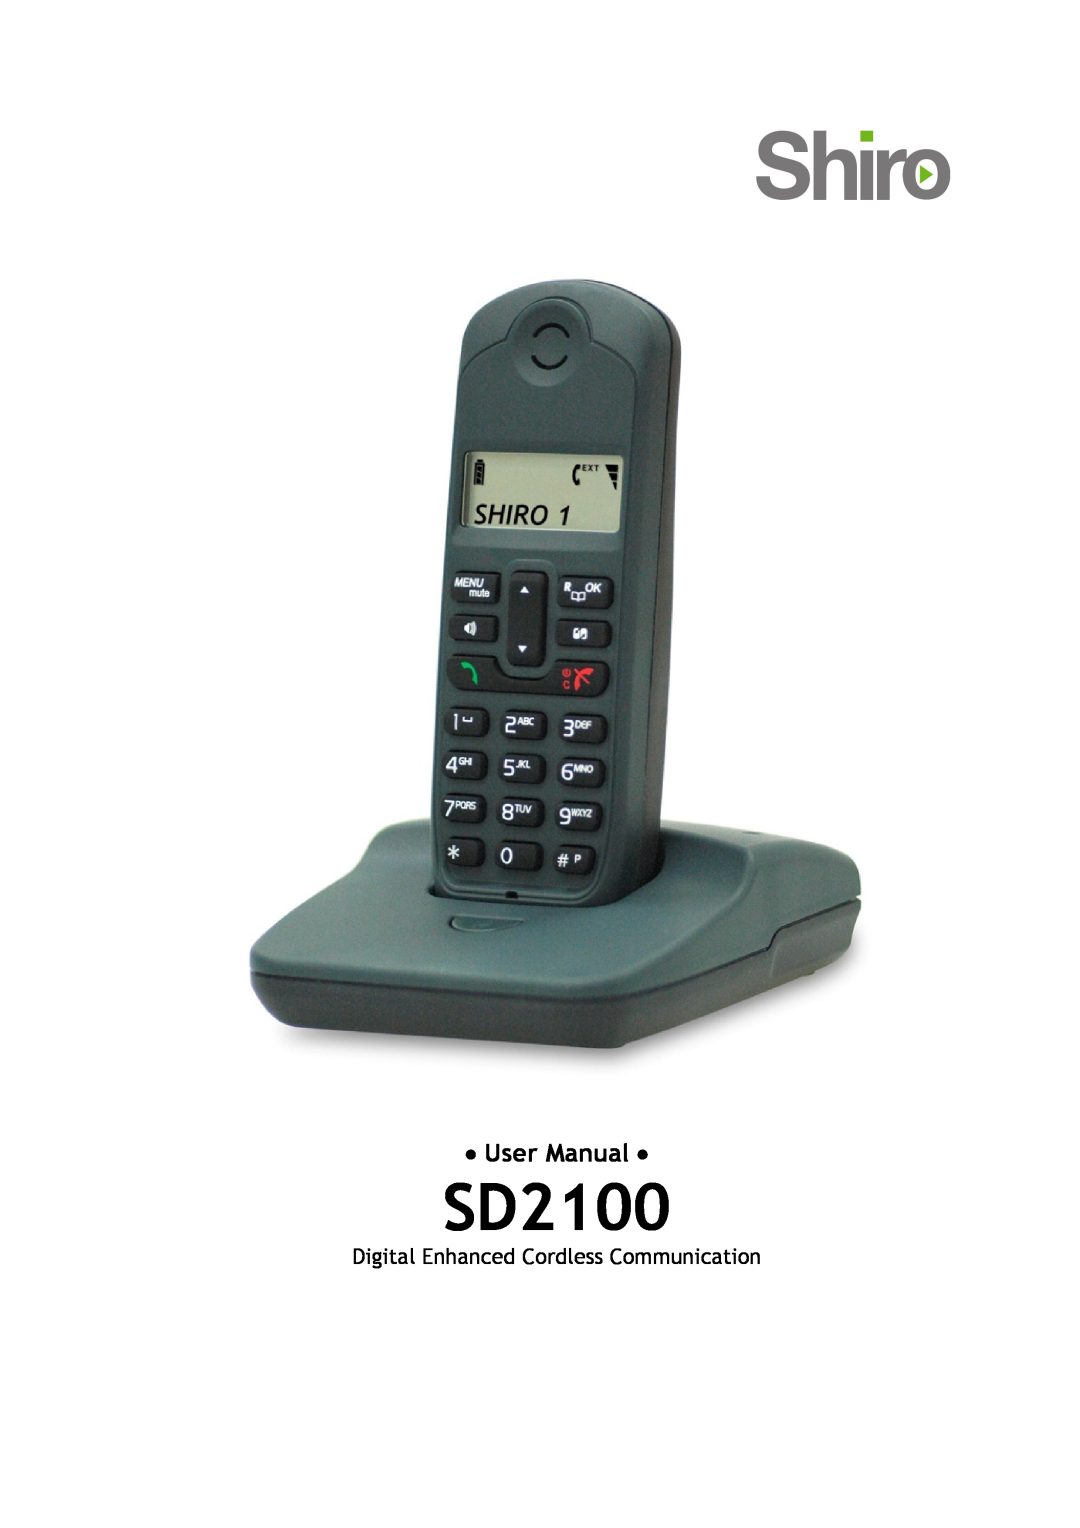 Shiro SD2100 user manual User Manual, Digital Enhanced Cordless Communication 